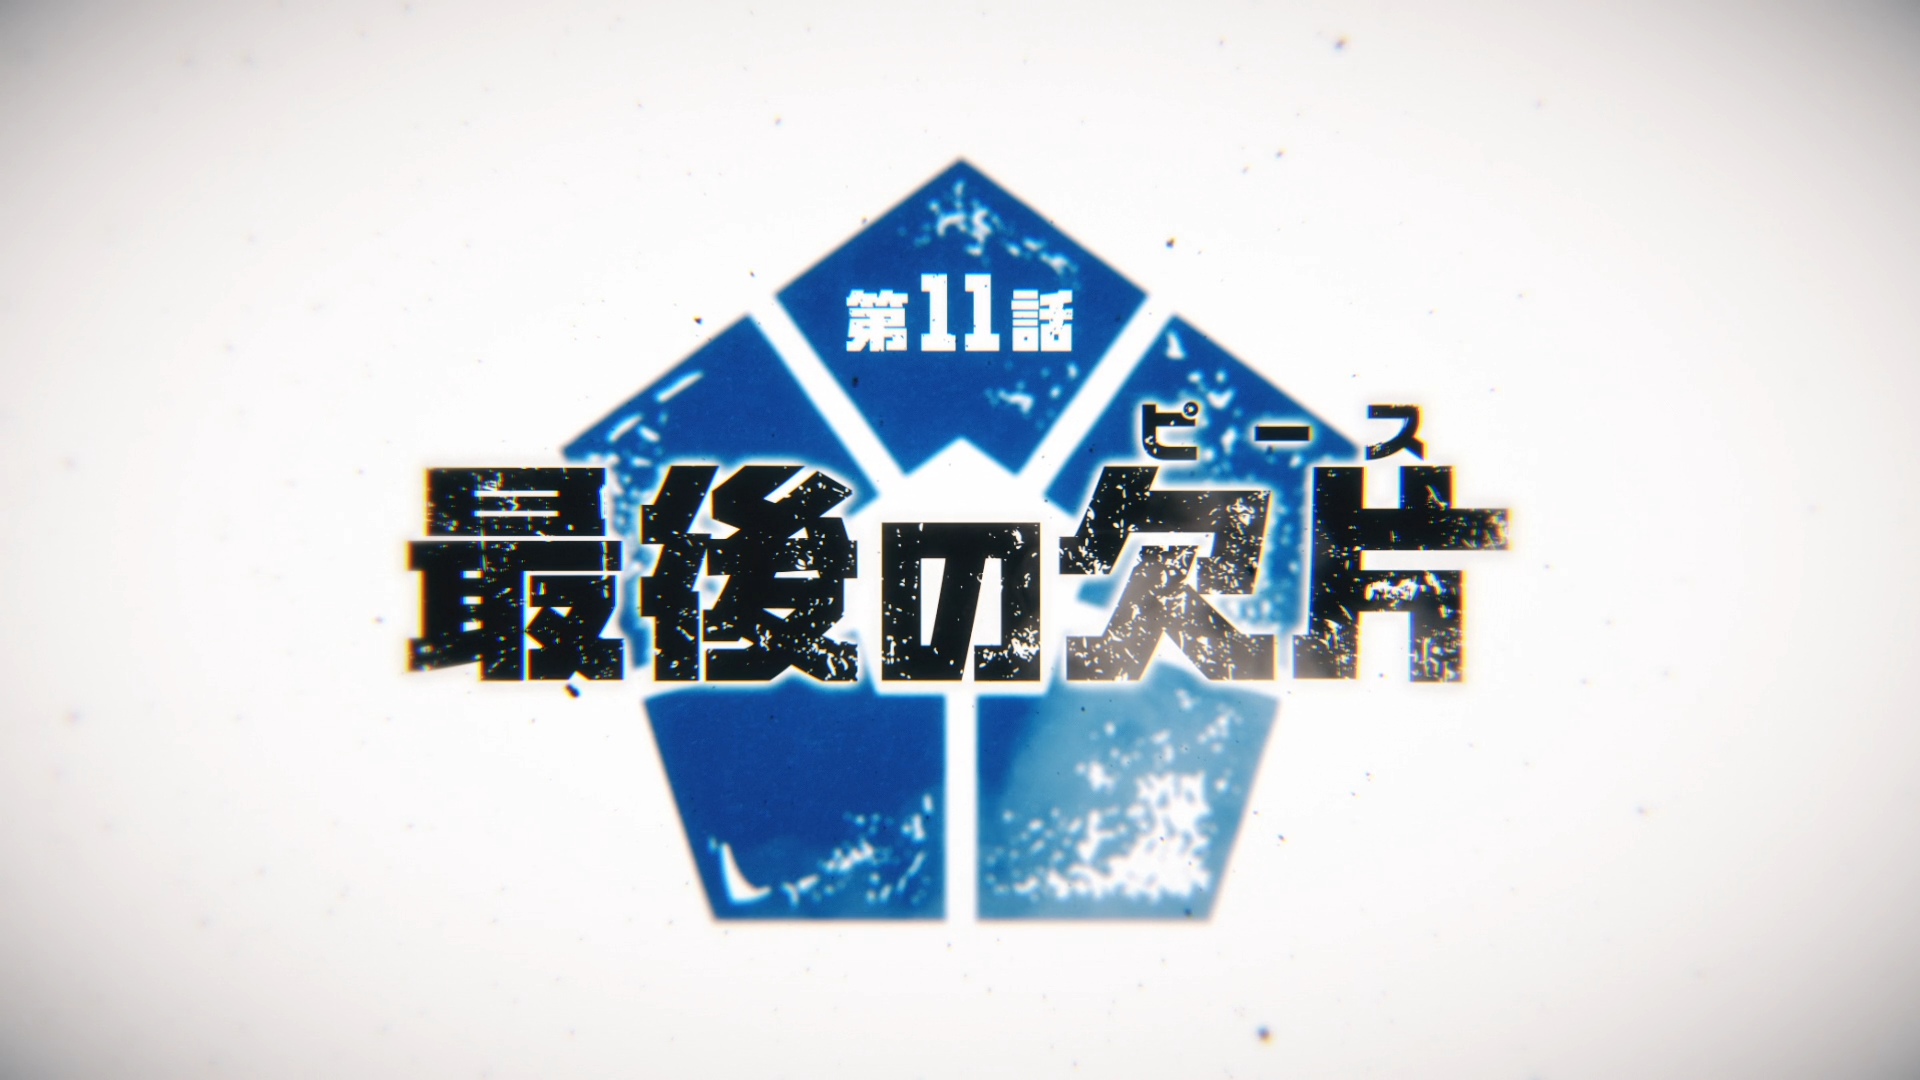 animes icons. — ⌕ blue lock - nagi seishiro. like or reblog if you...